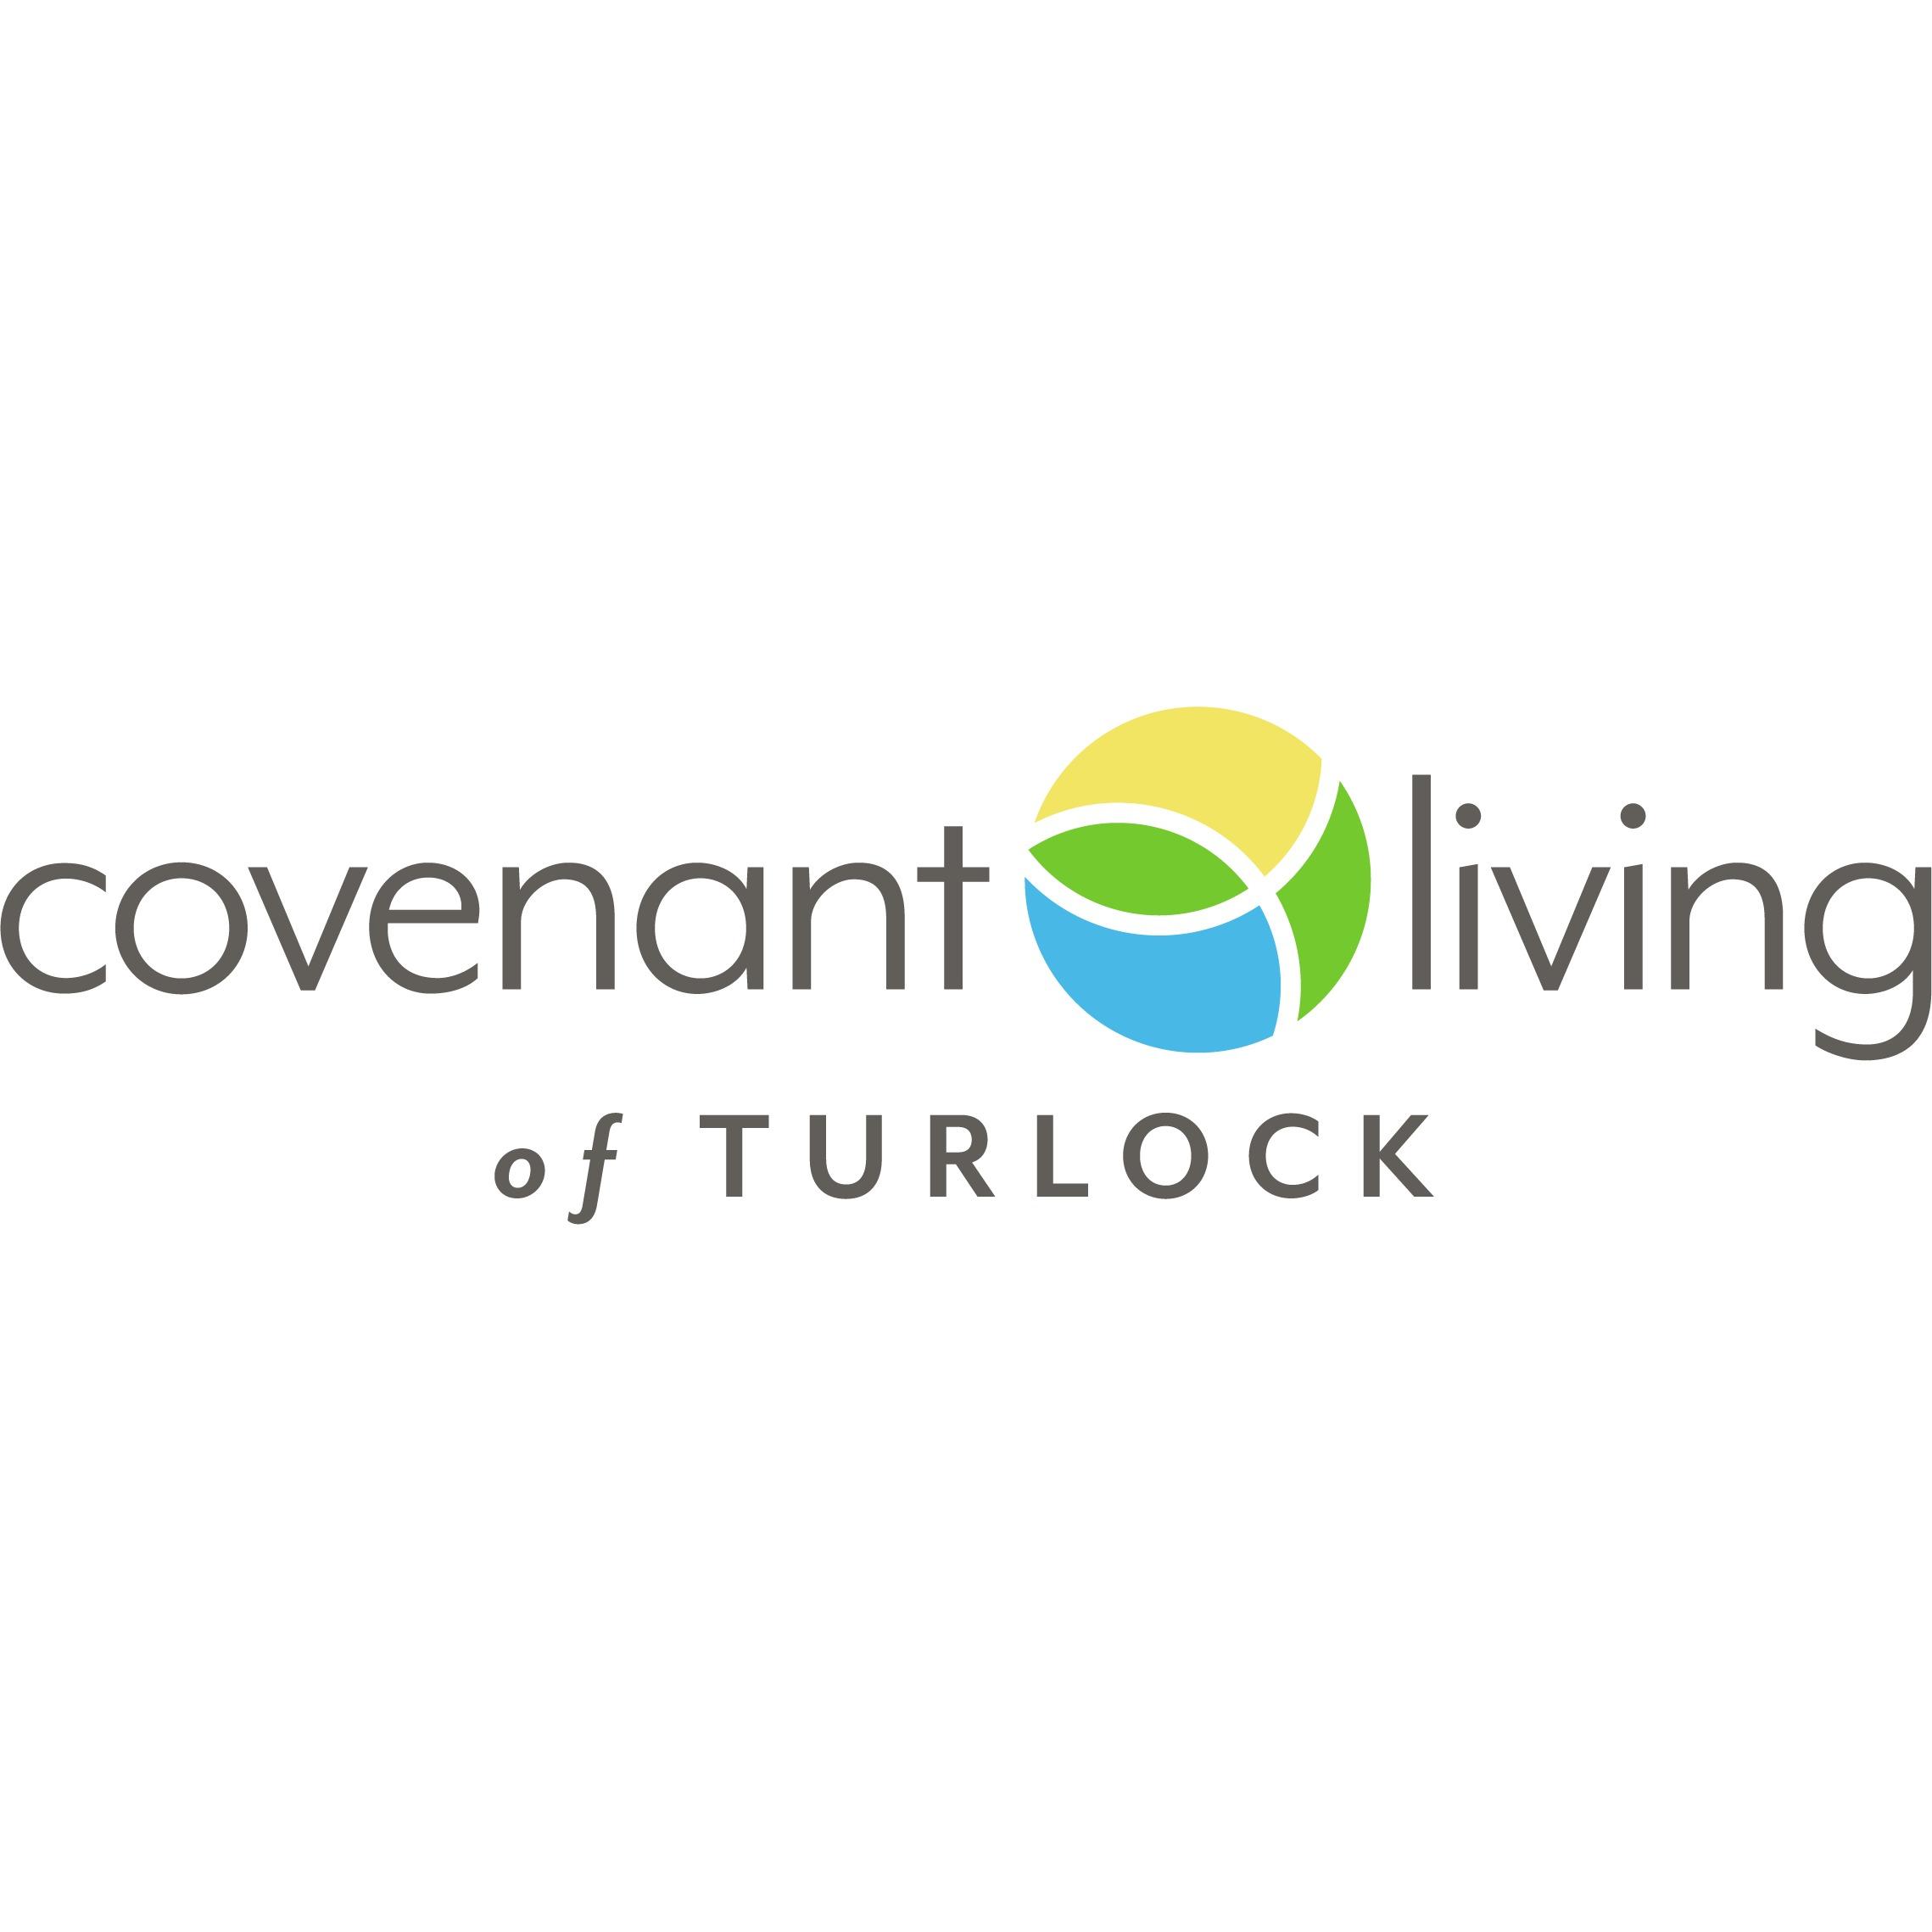 Covenant Living of Turlock